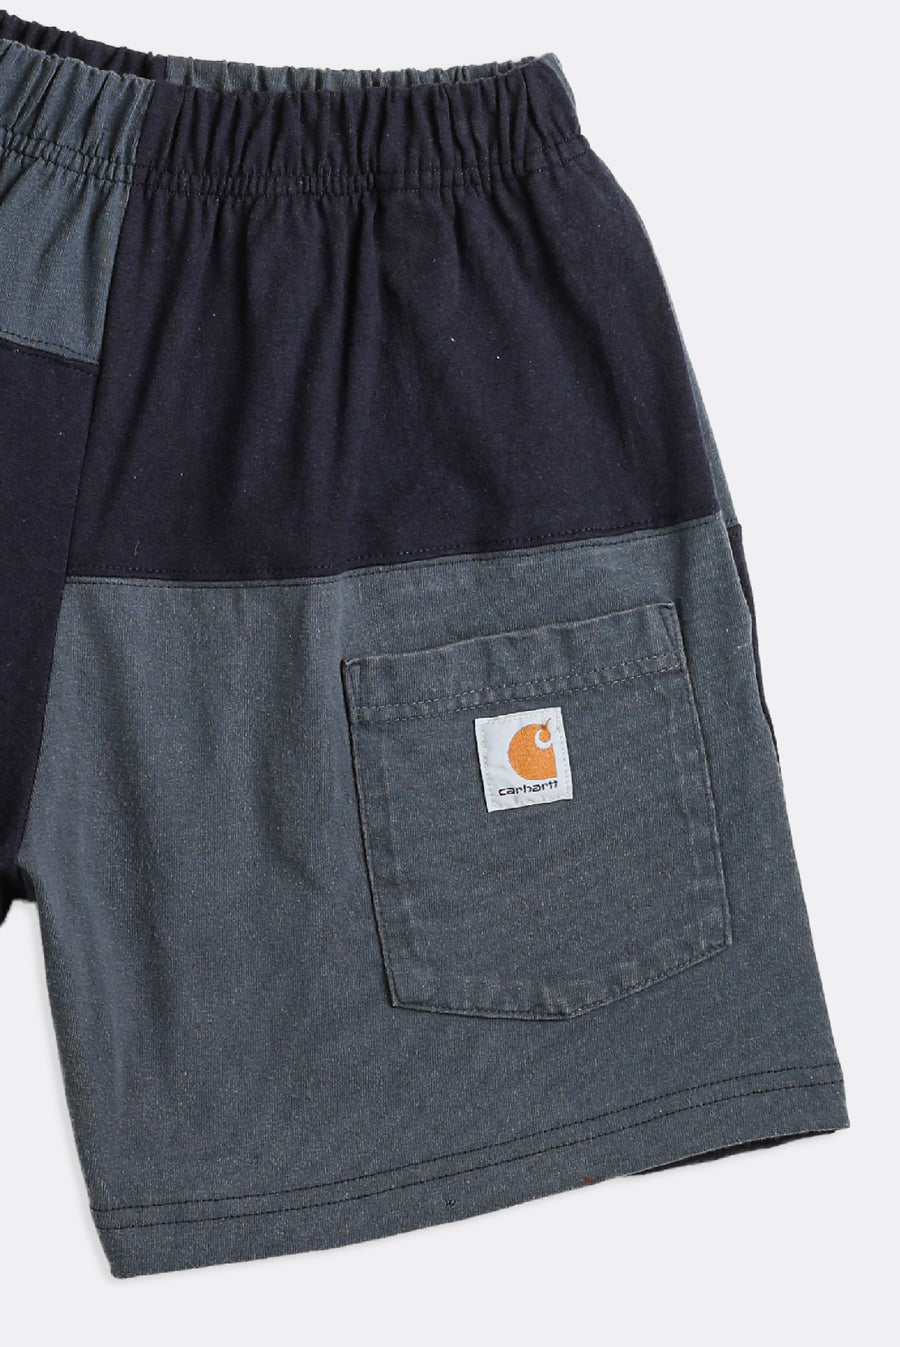 Unisex Rework Carhartt Patchwork Tee Shorts - XS, S, M, L, XL